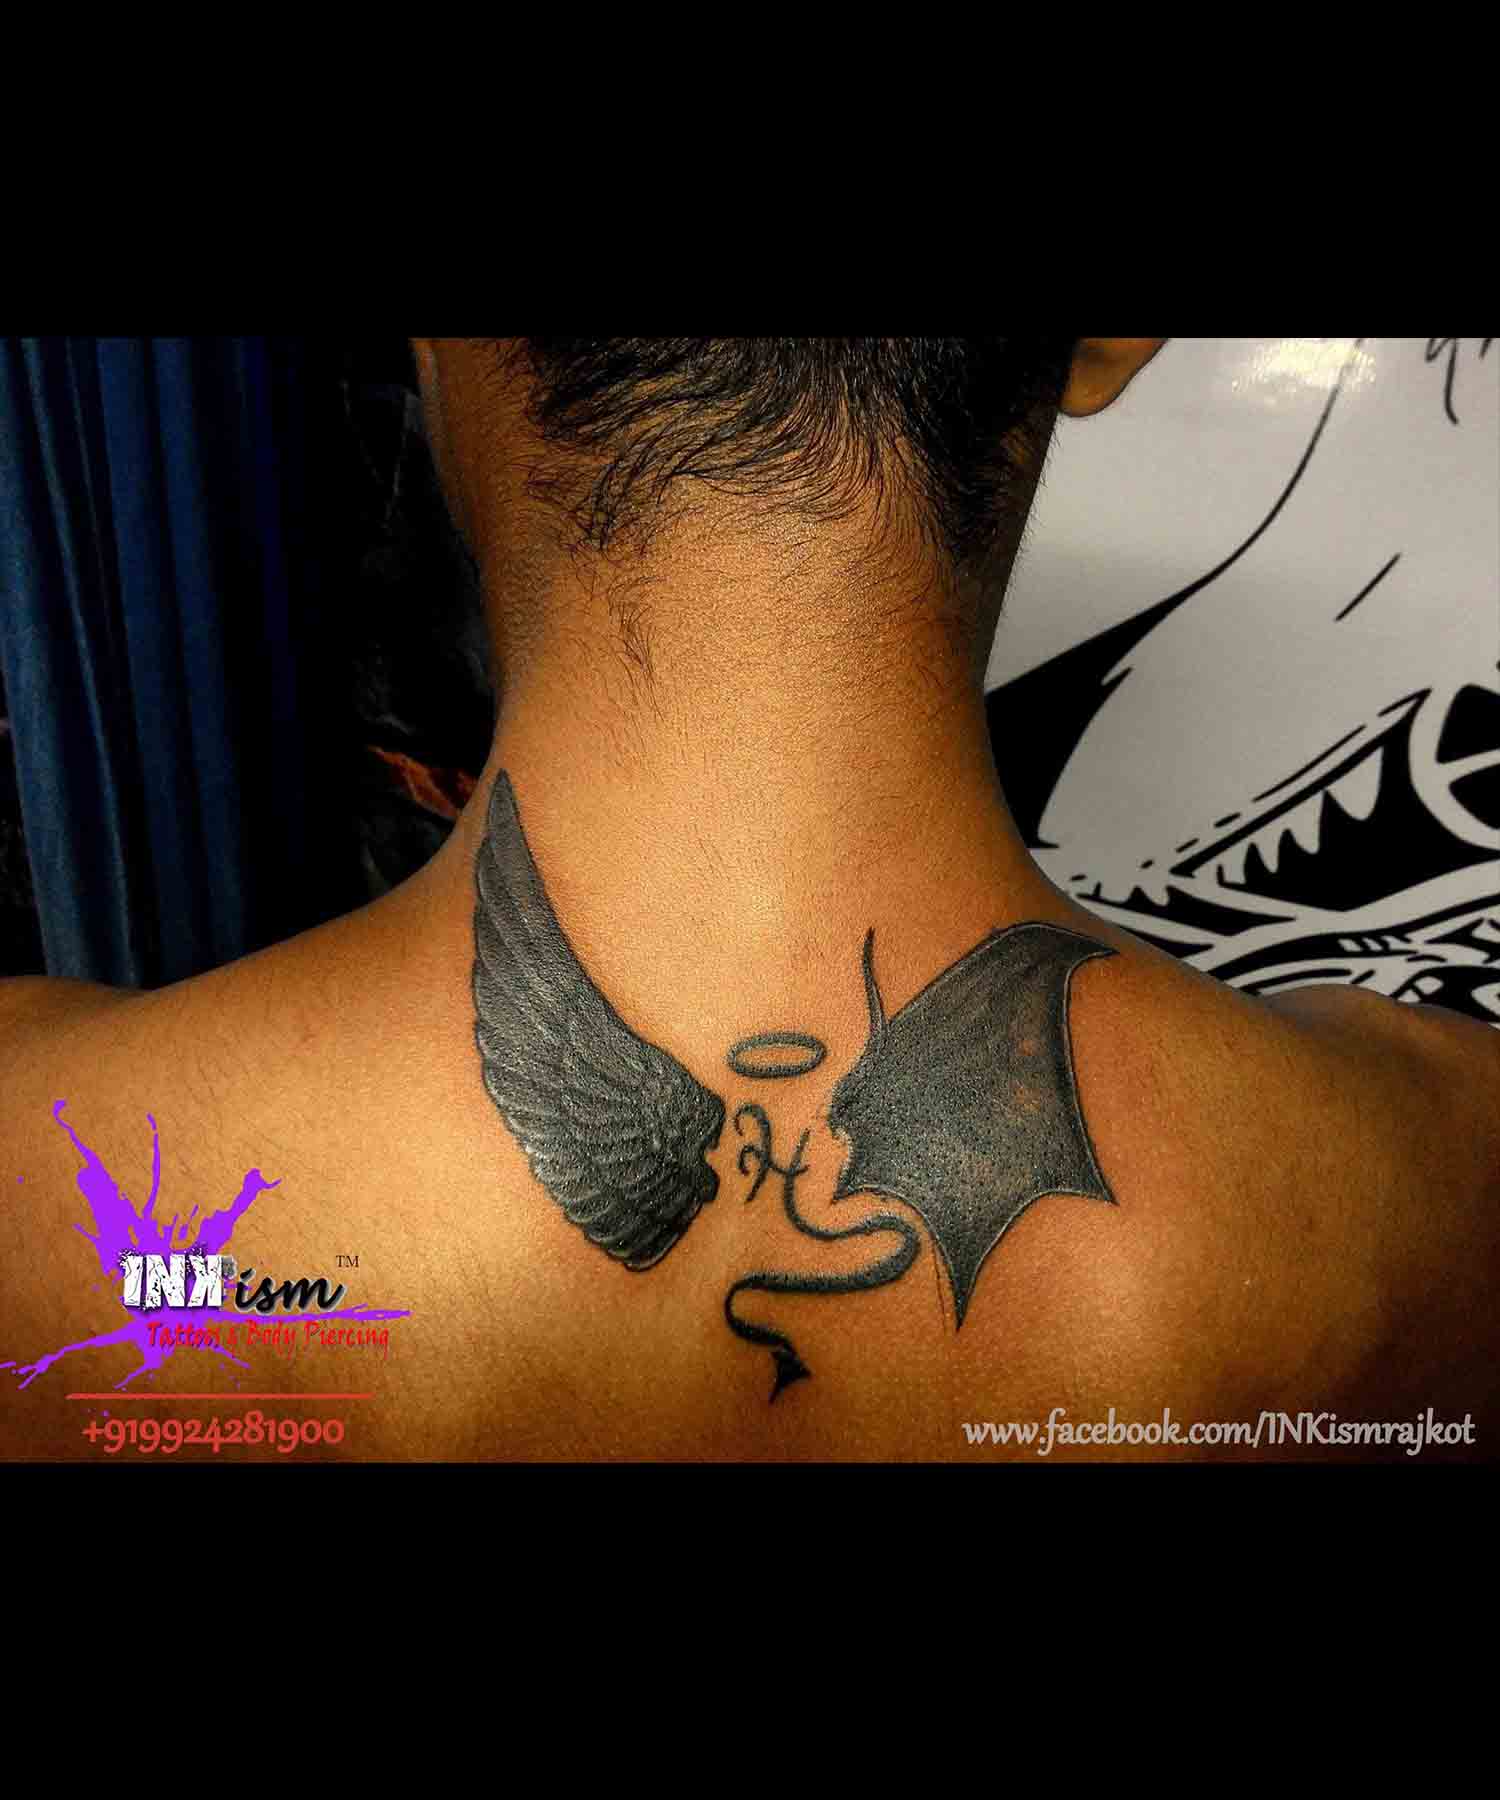 Angel and Demon wings tattoo, angel wings tattoo, Demon wing tattoo, calligraphy tattoo, Inkism tattoo and body piercing rajkot gujarat